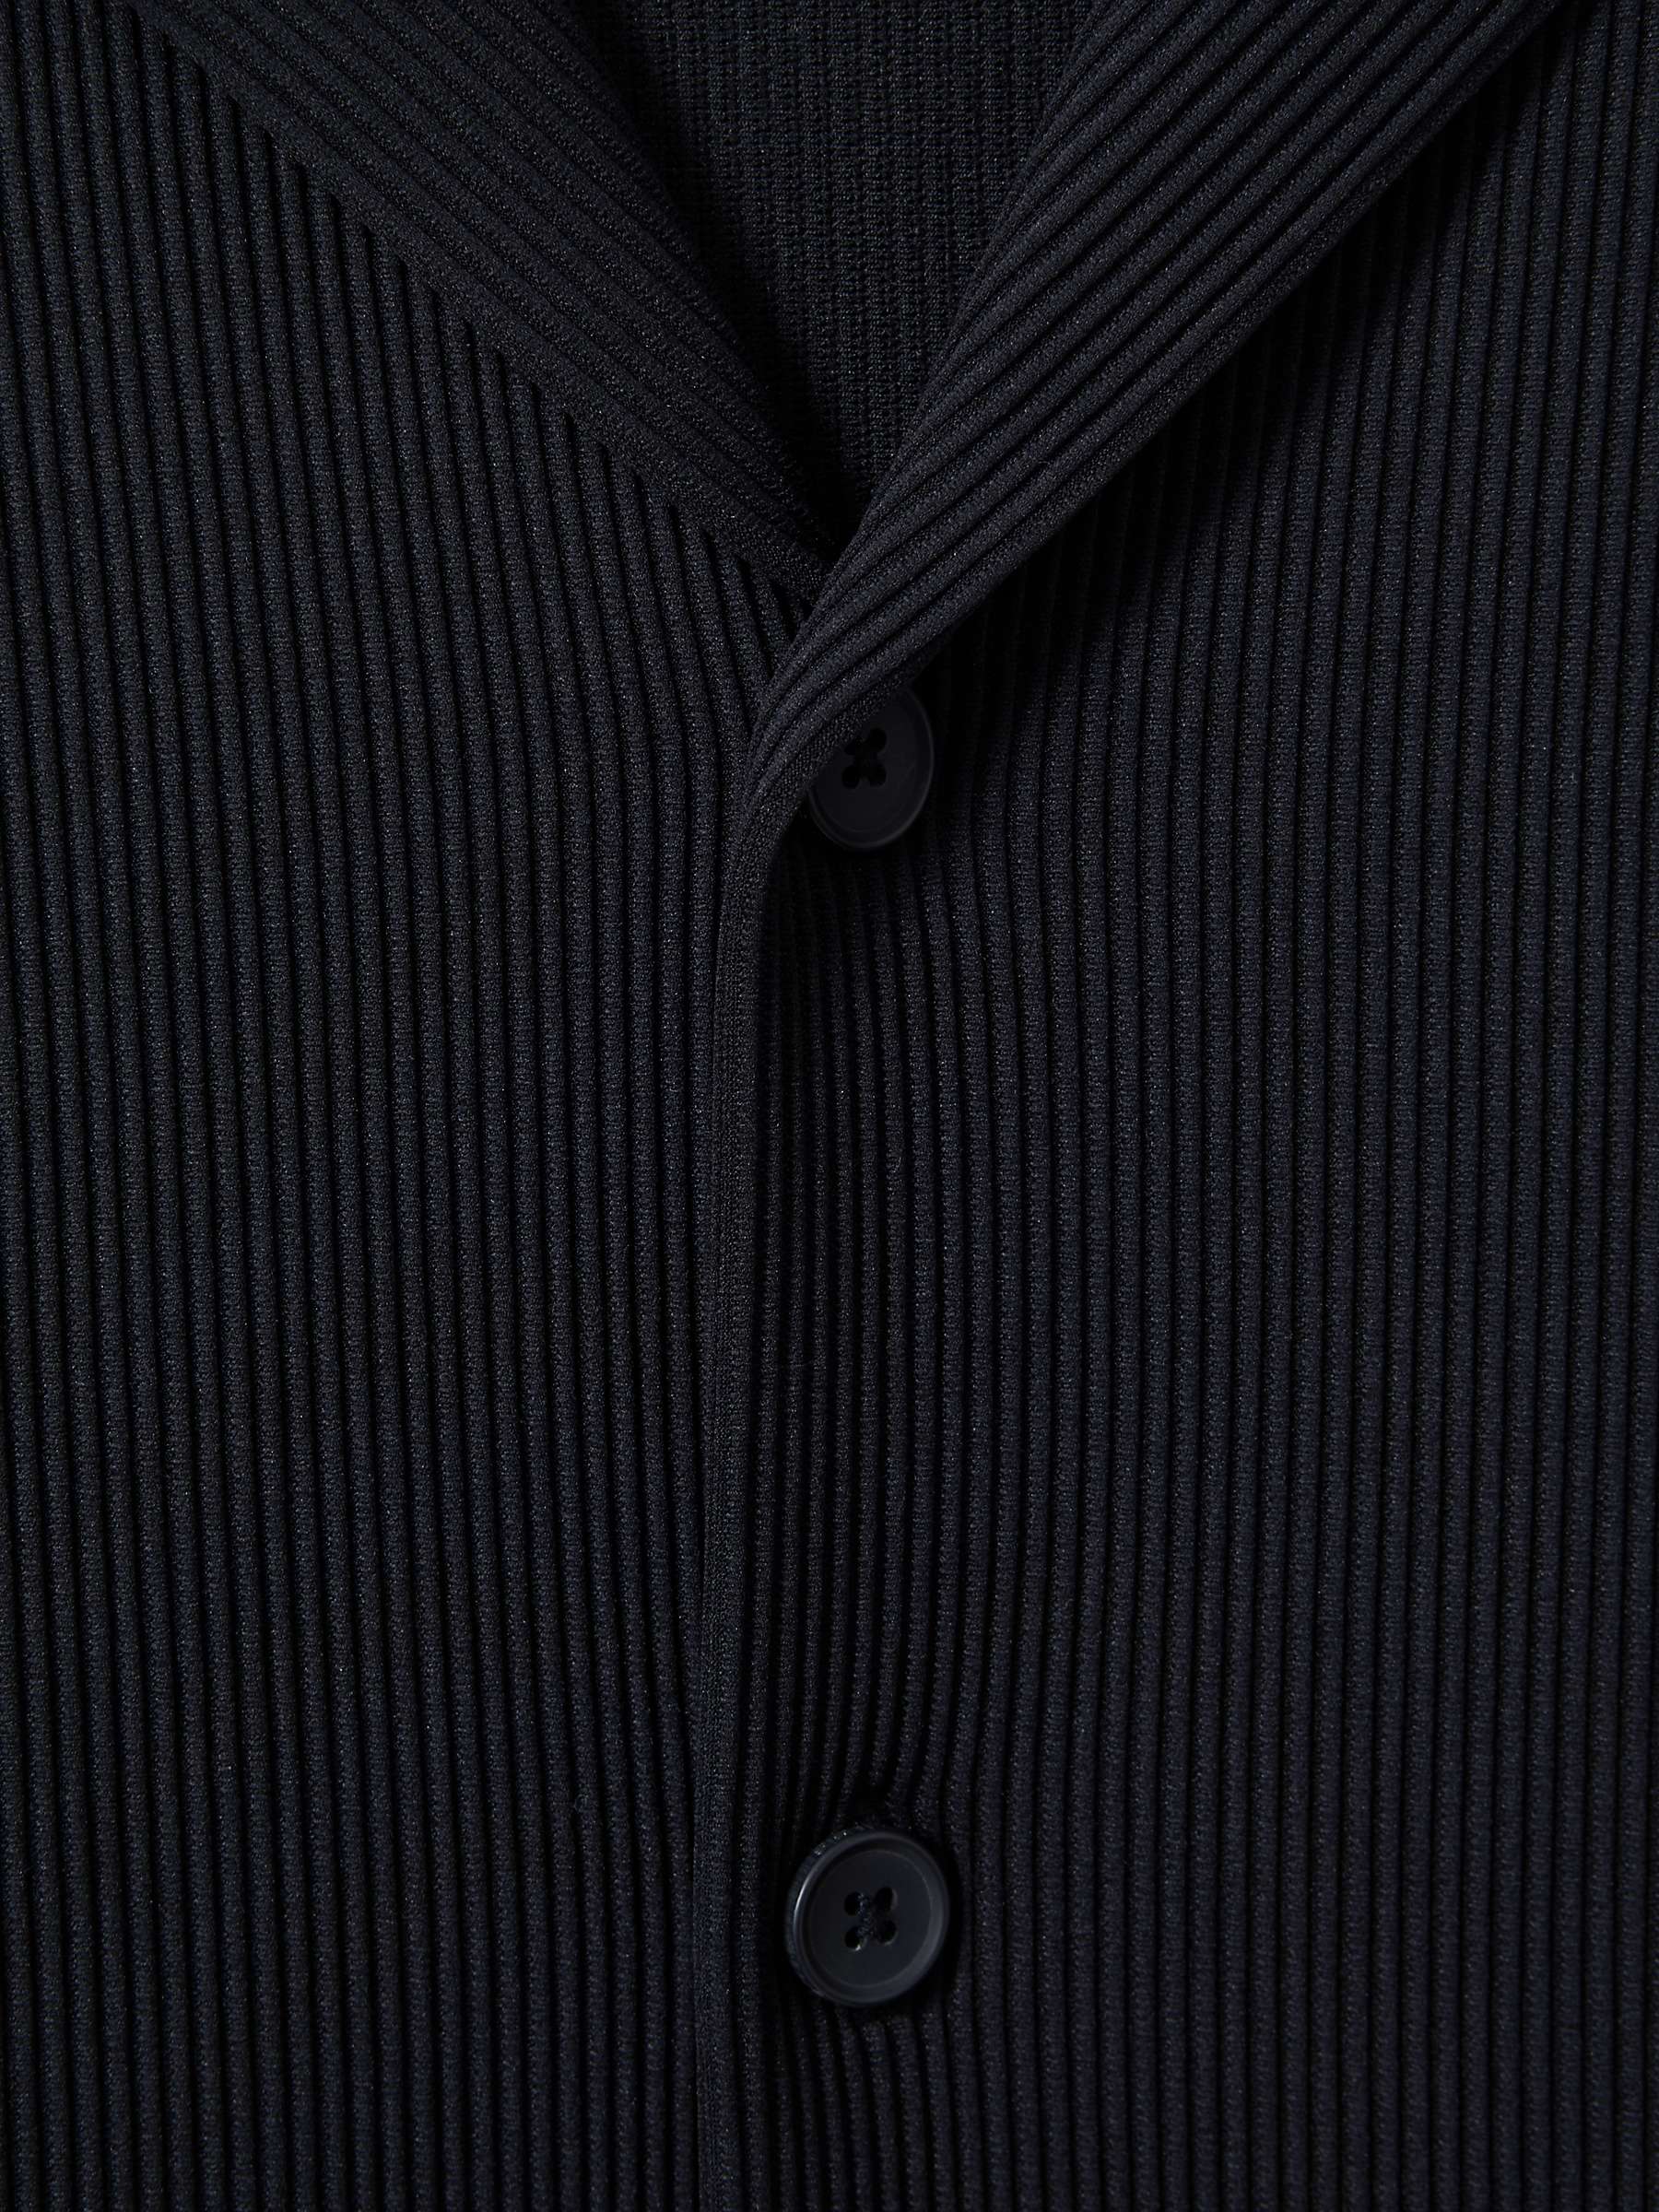 Buy Reiss Chase Rib Textured Short Sleeve Shirt Online at johnlewis.com